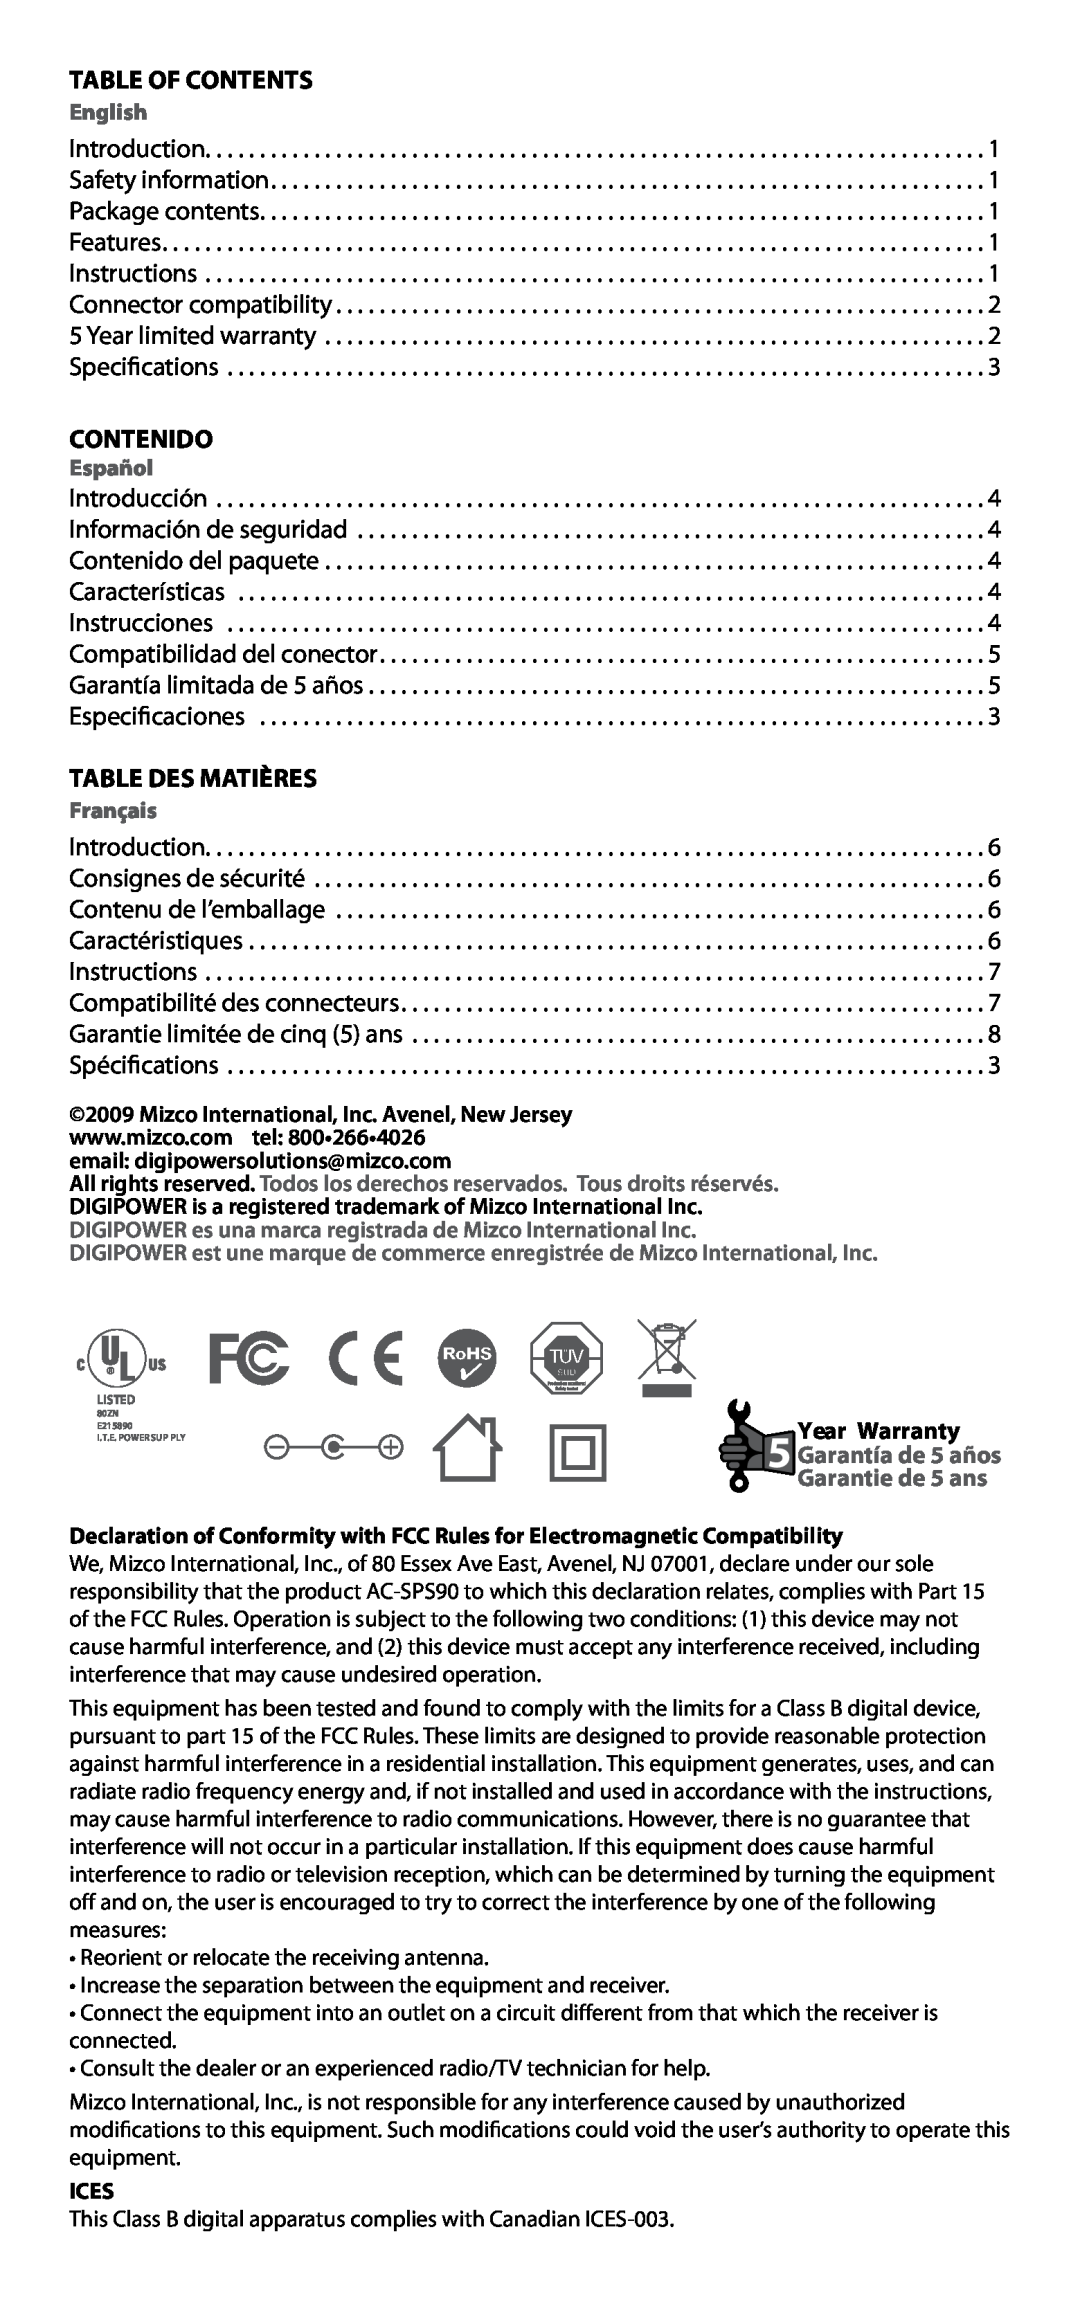 DigiPower AC-SP590 manual Table of Contents, Contenido, Table des matières, English, Español, Français, Ices 